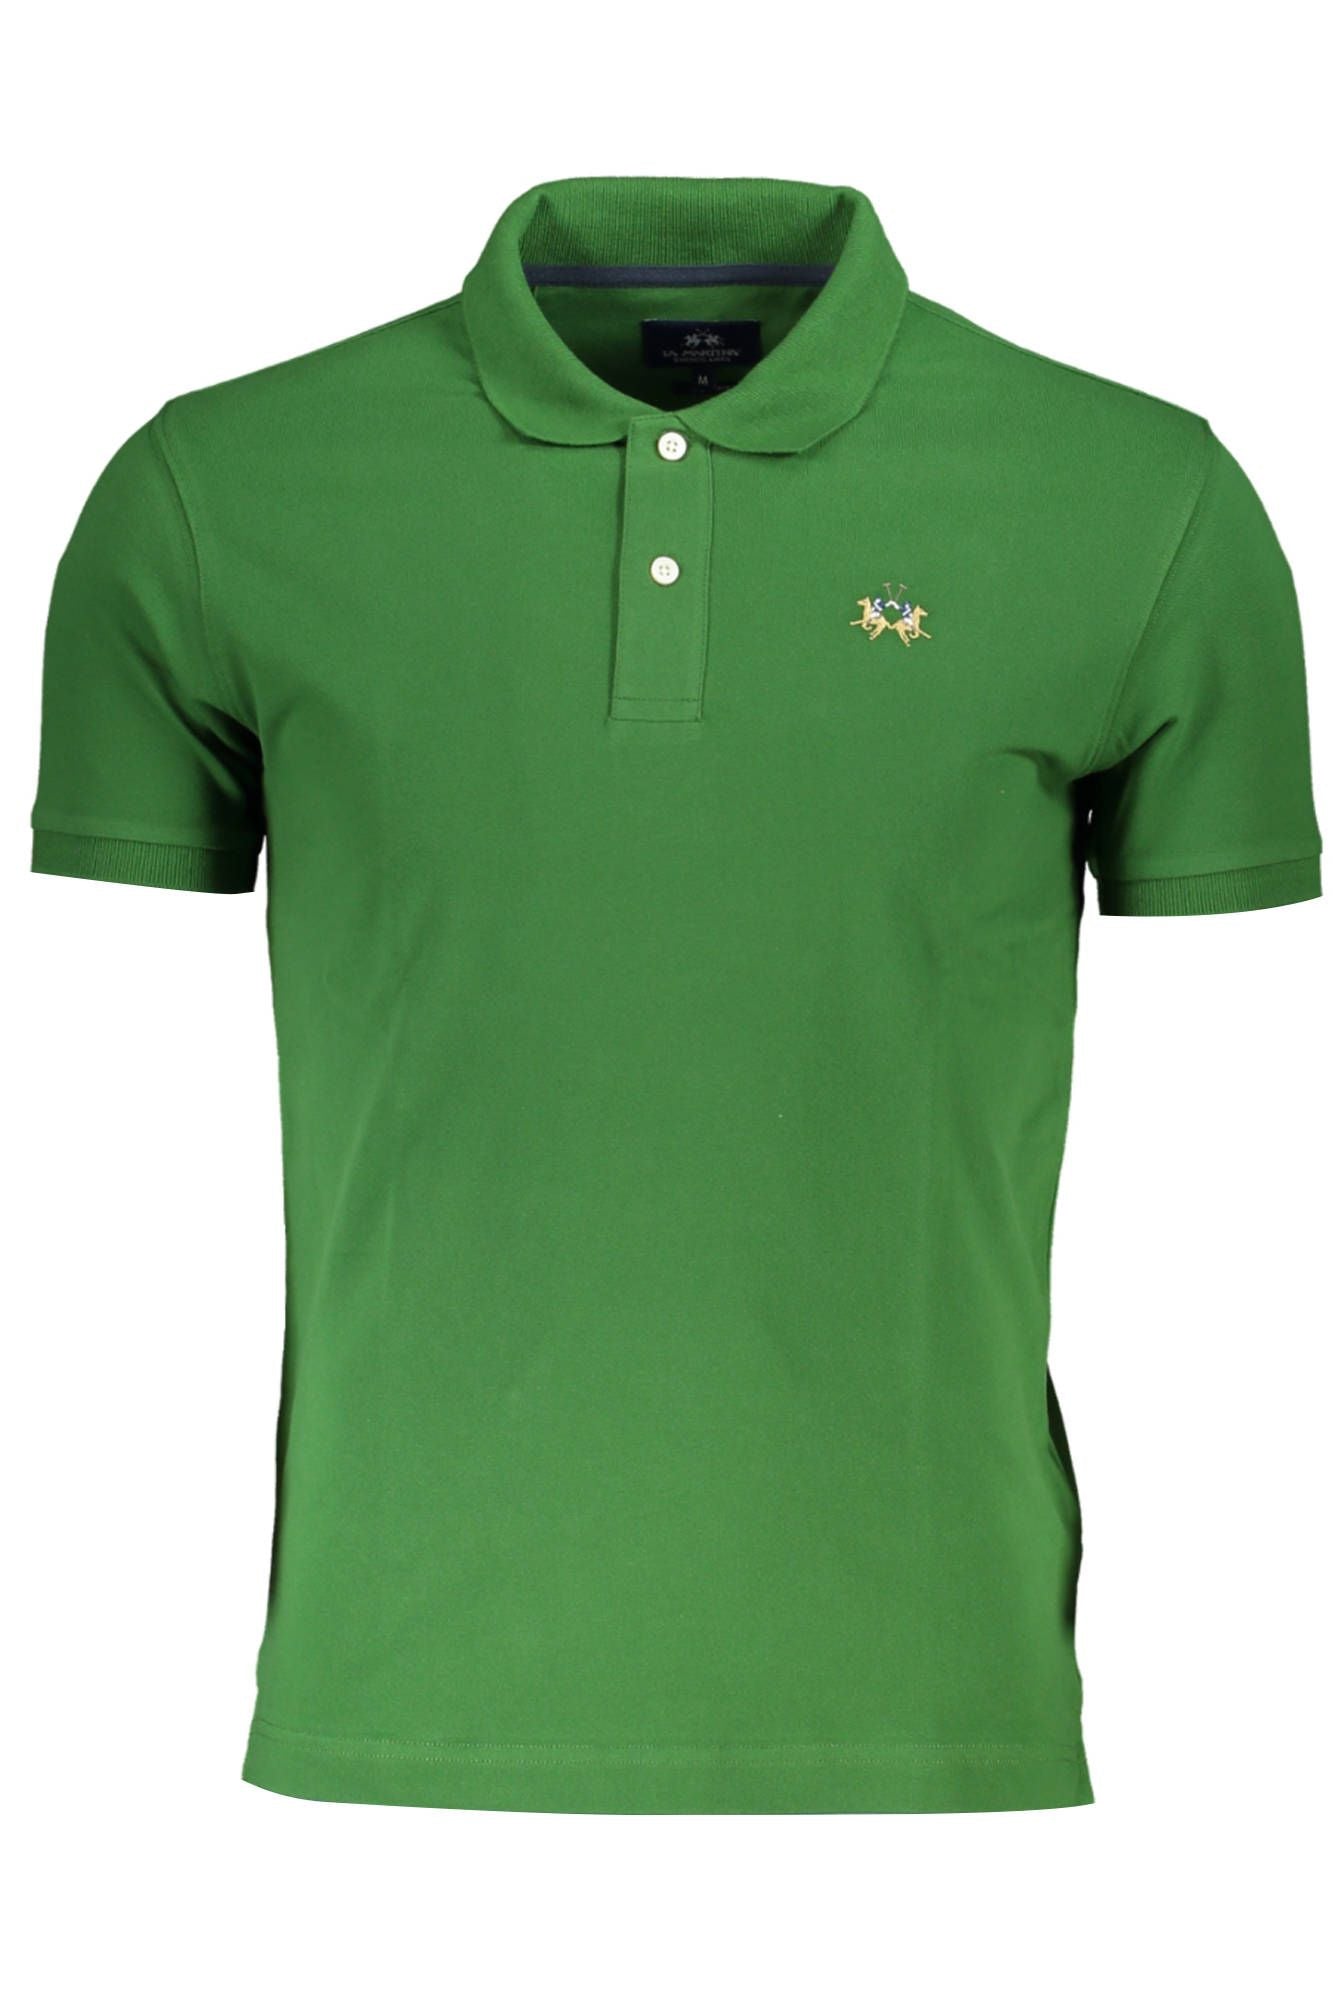 La Martina Green Cotton Polo Shirt